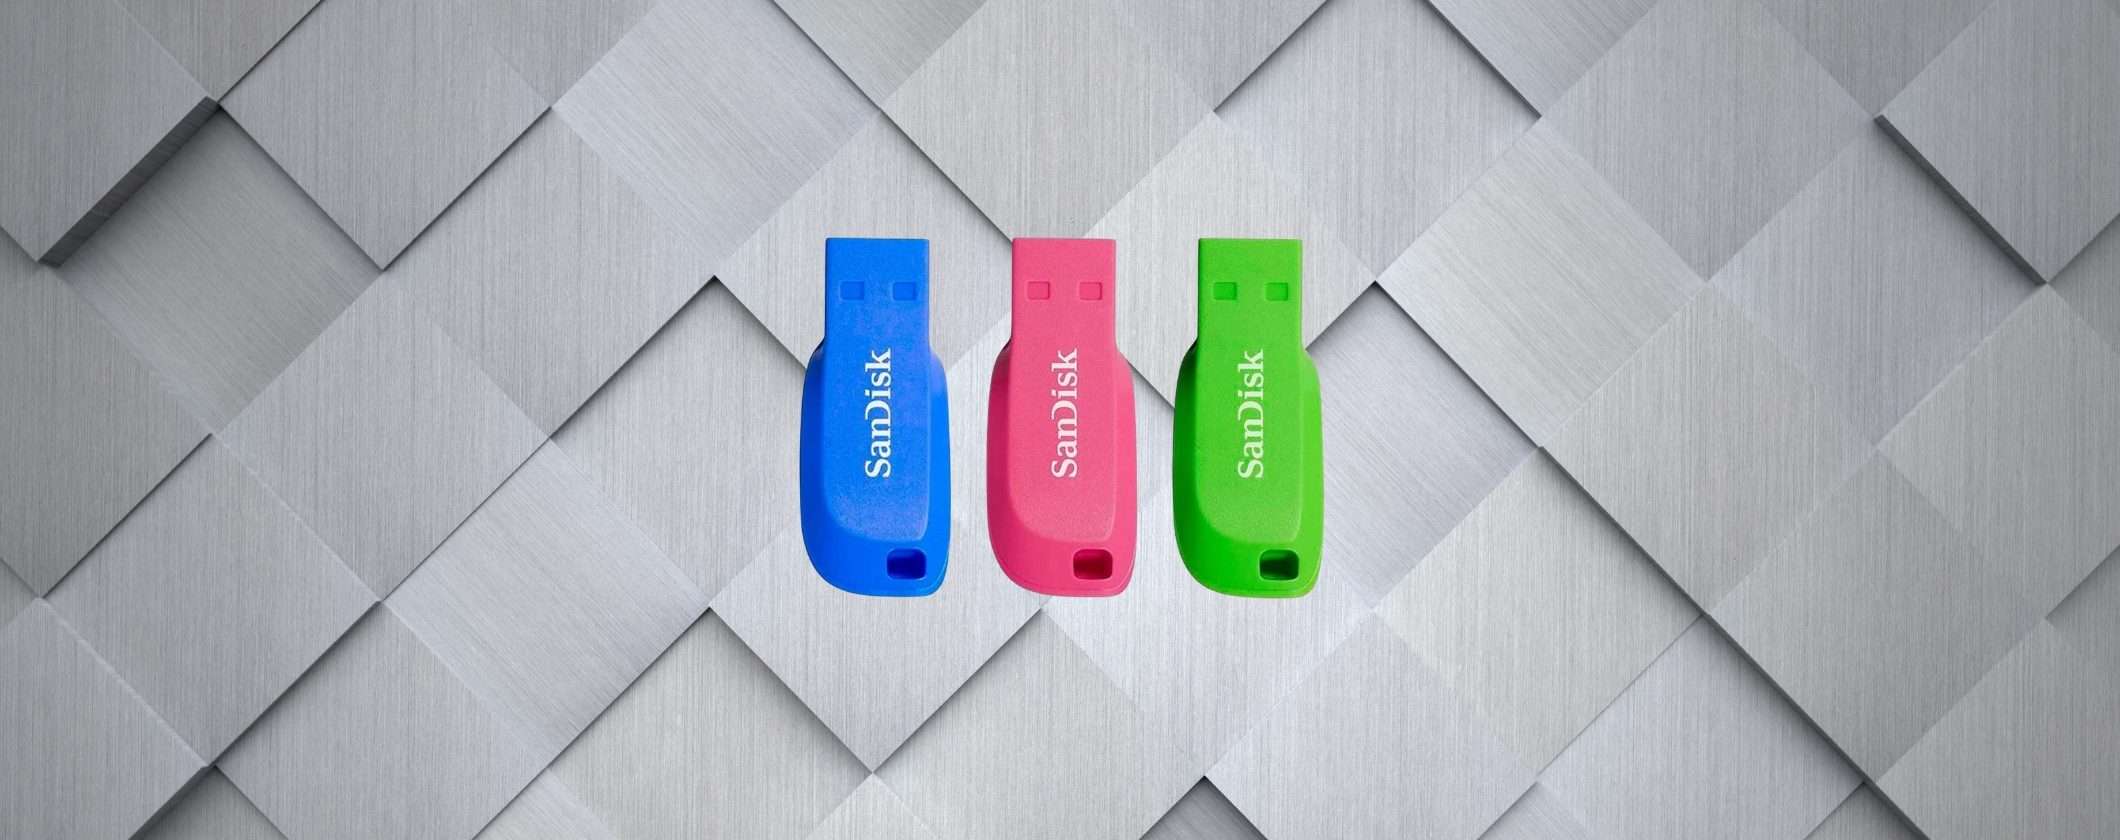 3 Chiavette USB SanDisk a meno di 20€: scopri l'offerta